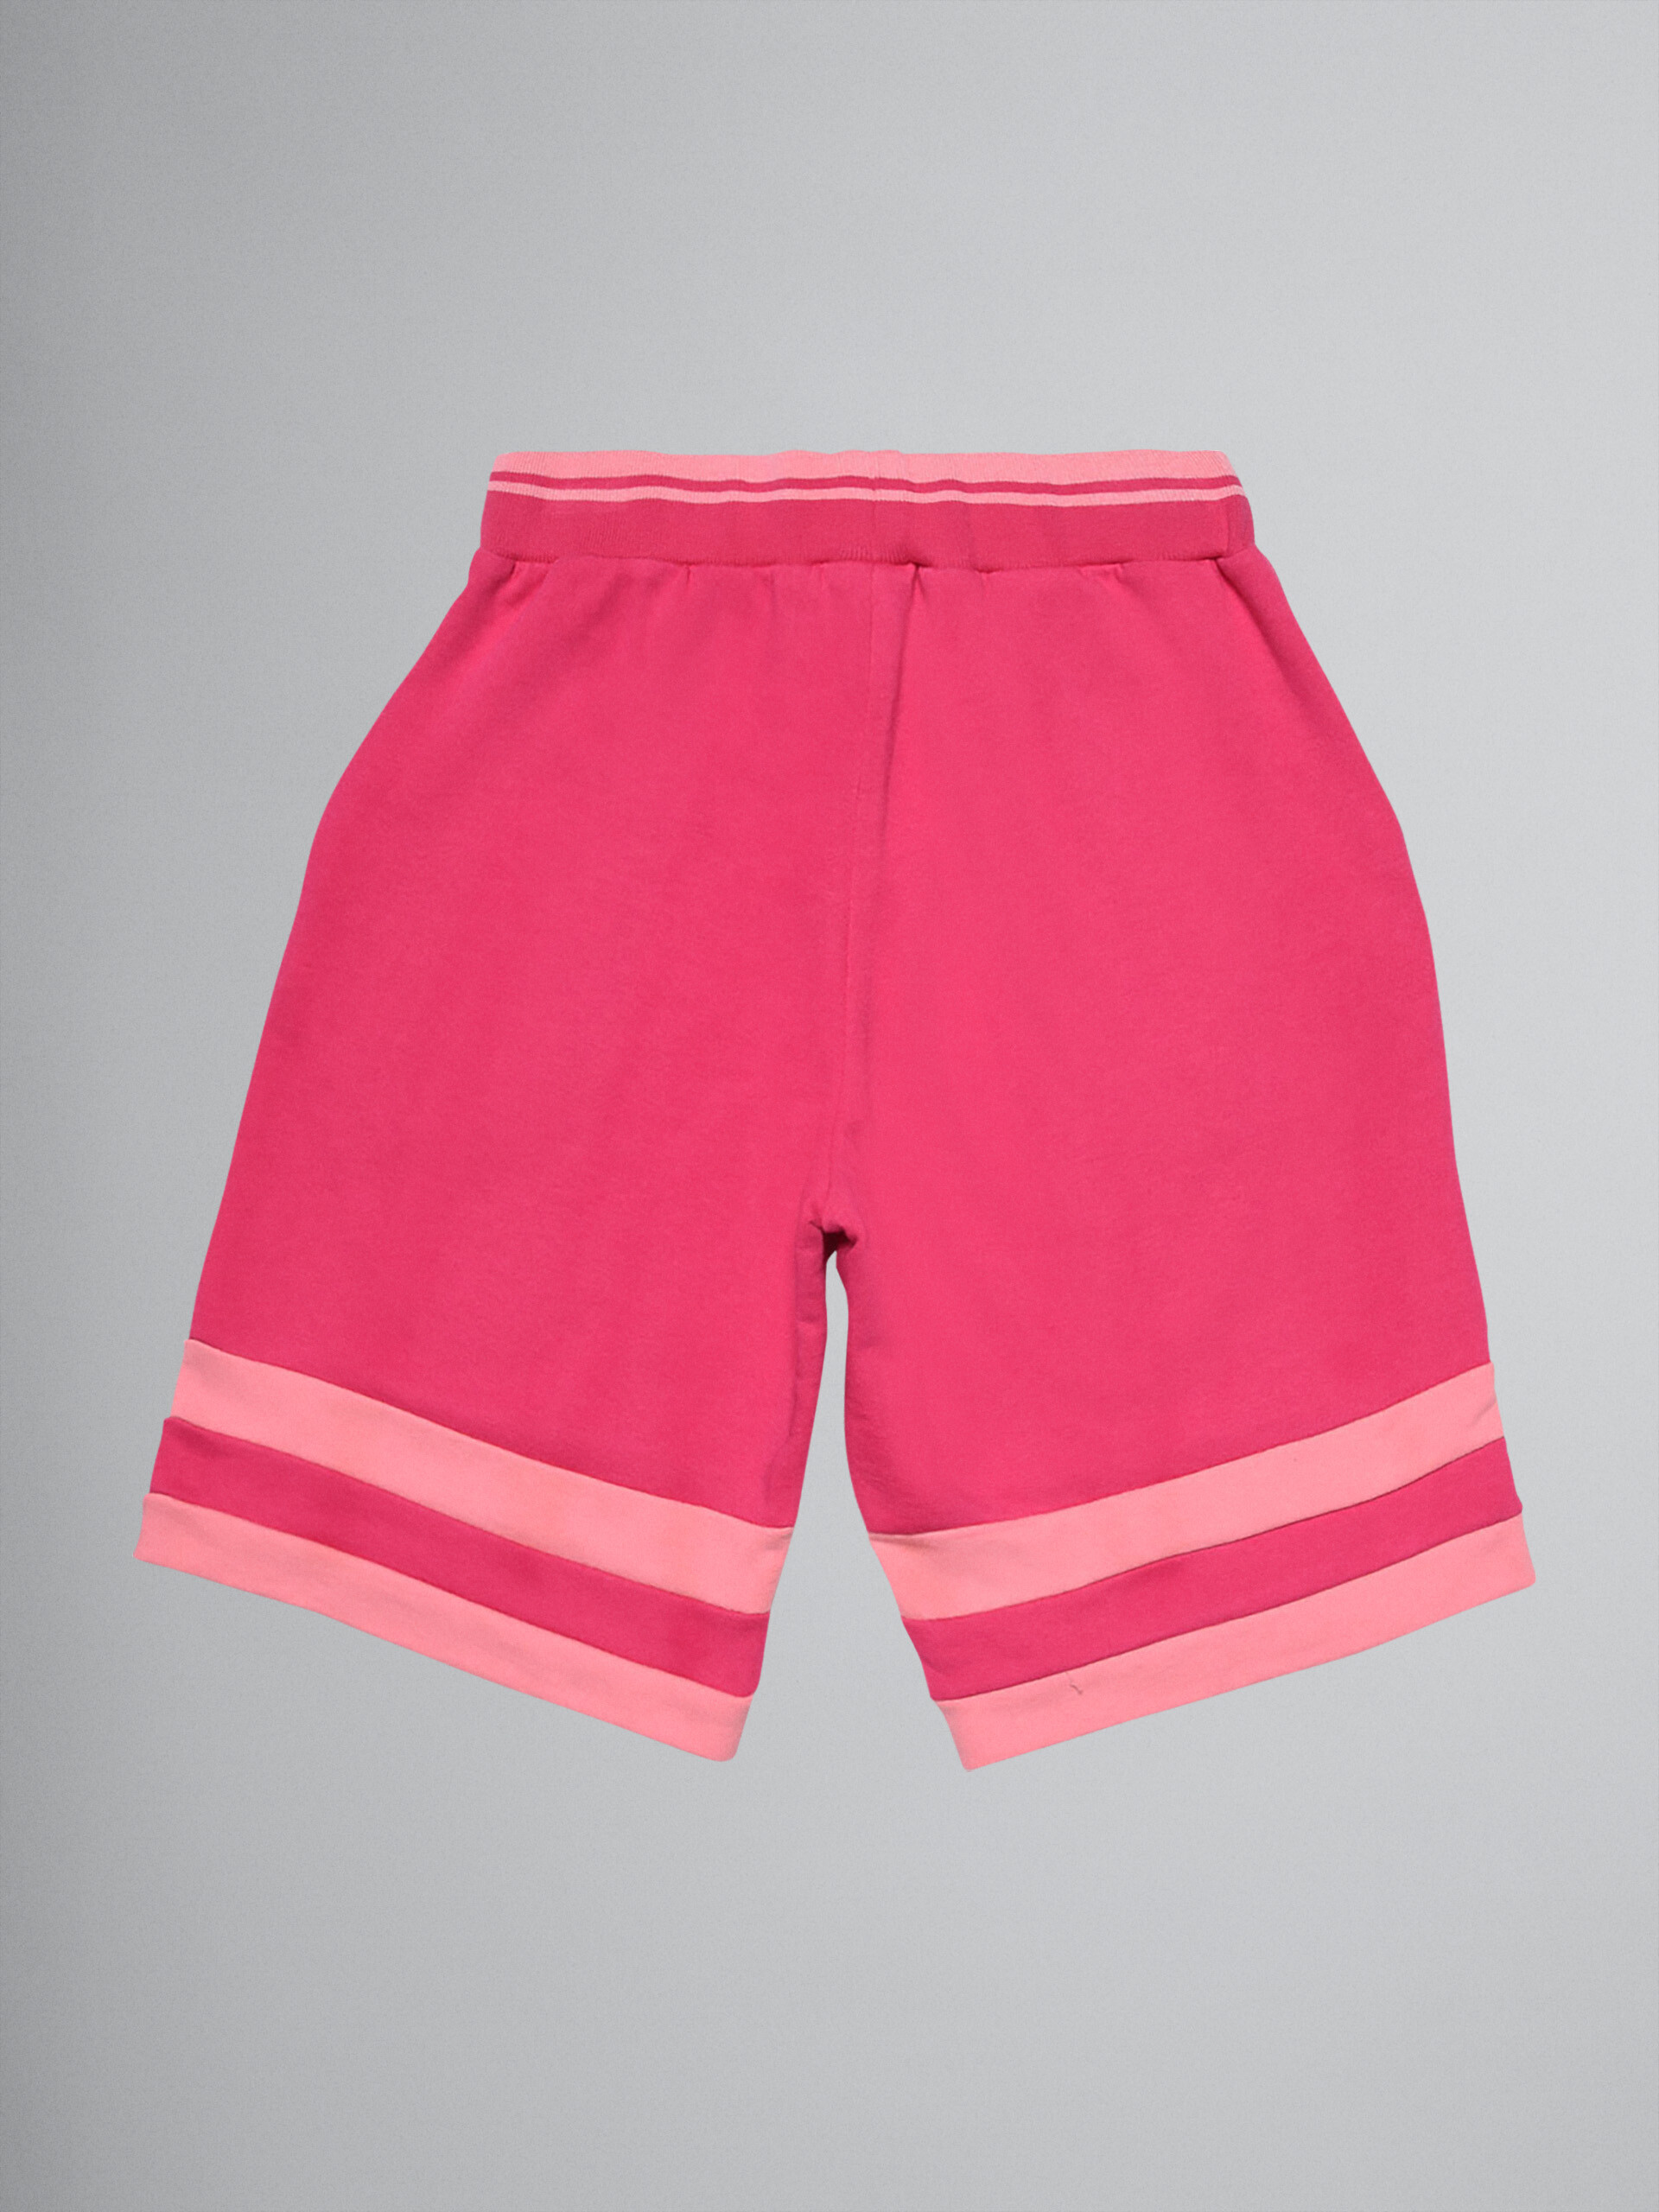 Kurze Laufhose aus rosafarbener Baumwolle im Colourblock-Stil - Hosen - Image 2